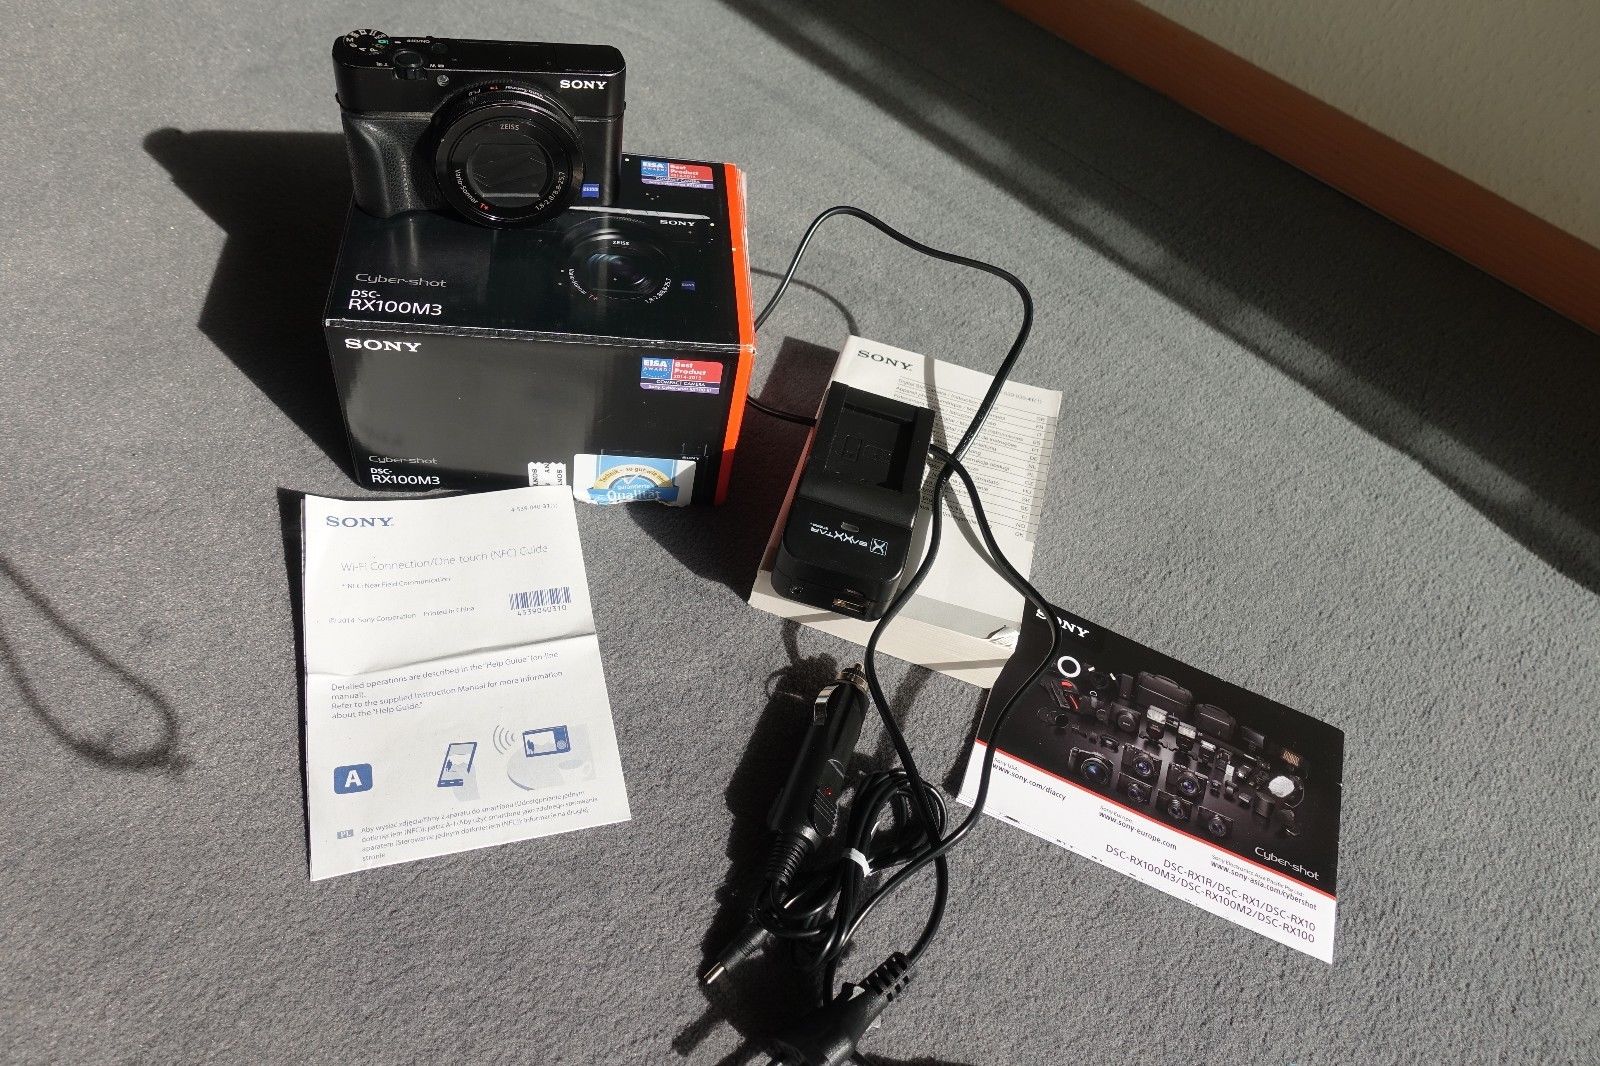 Sony Cyber-shot DSC-RX100M3 20.1 MP Digitalkamera - Schwarz- gebraucht